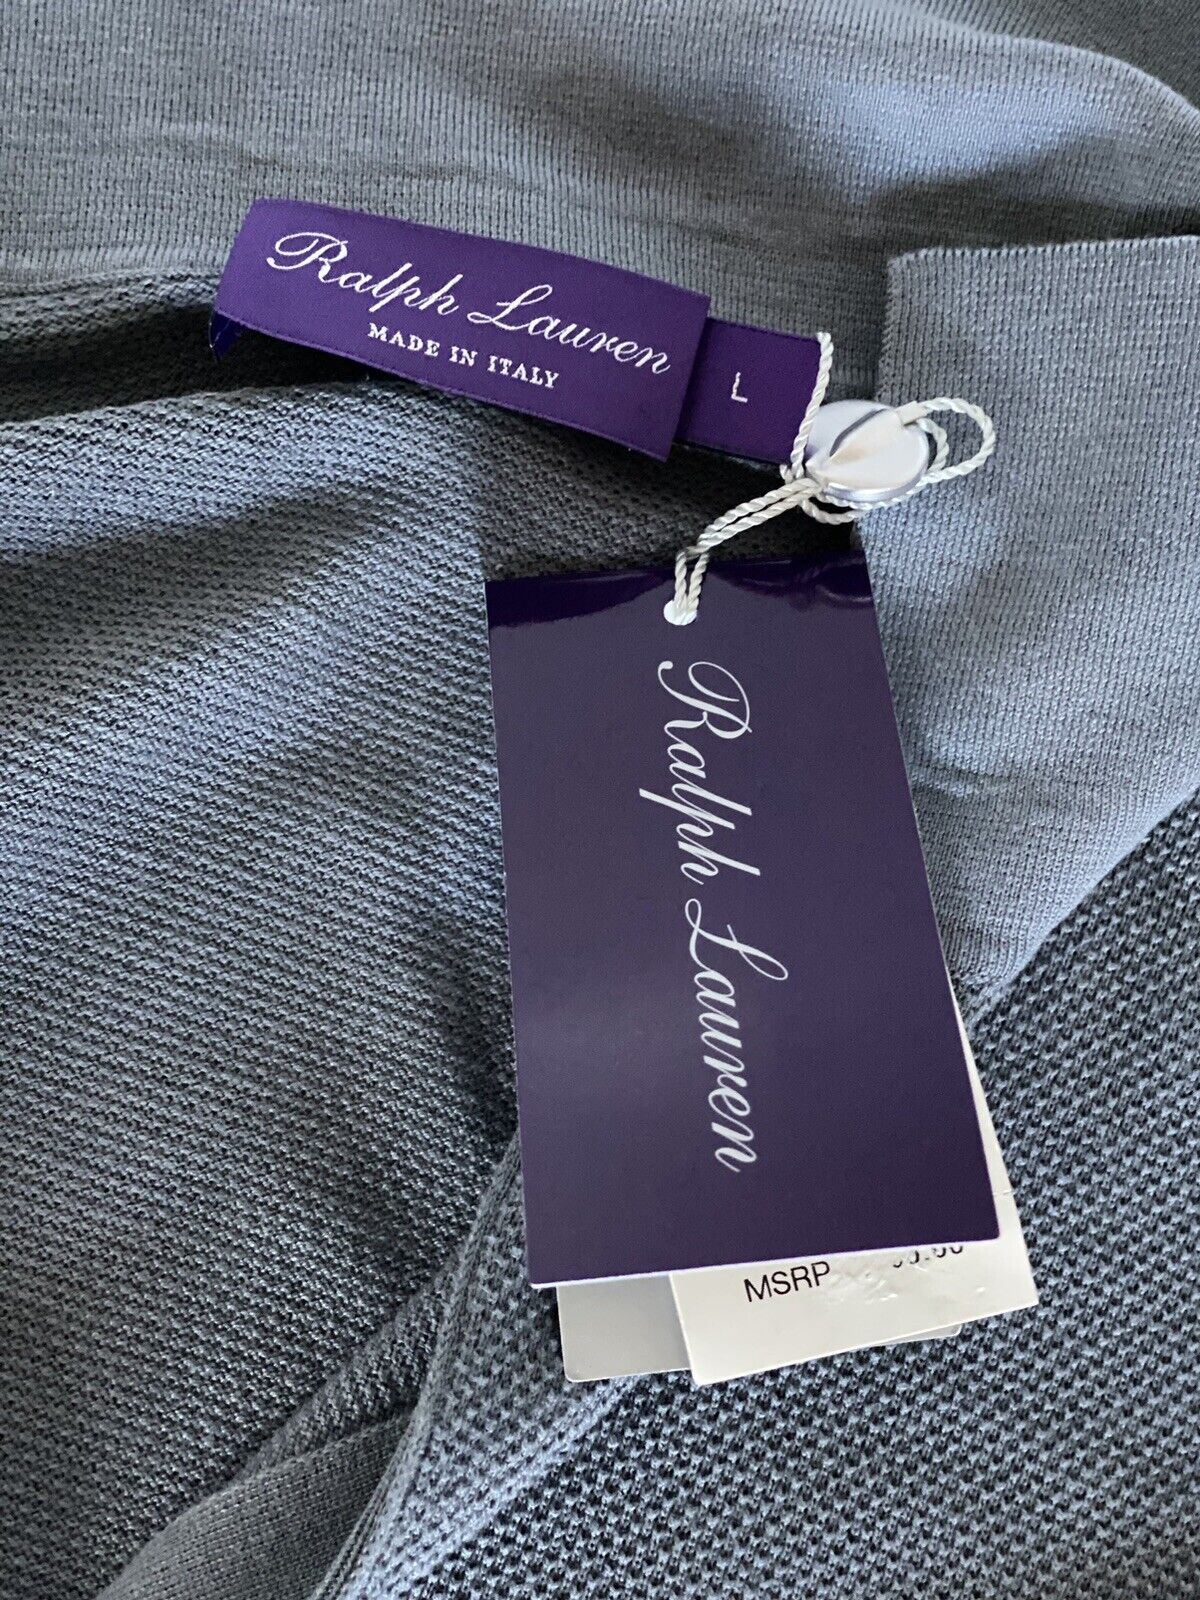 NWT $795 Ralph Lauren Purple Label Silk/Cotton Blue Bollon-up Shirt L Italy